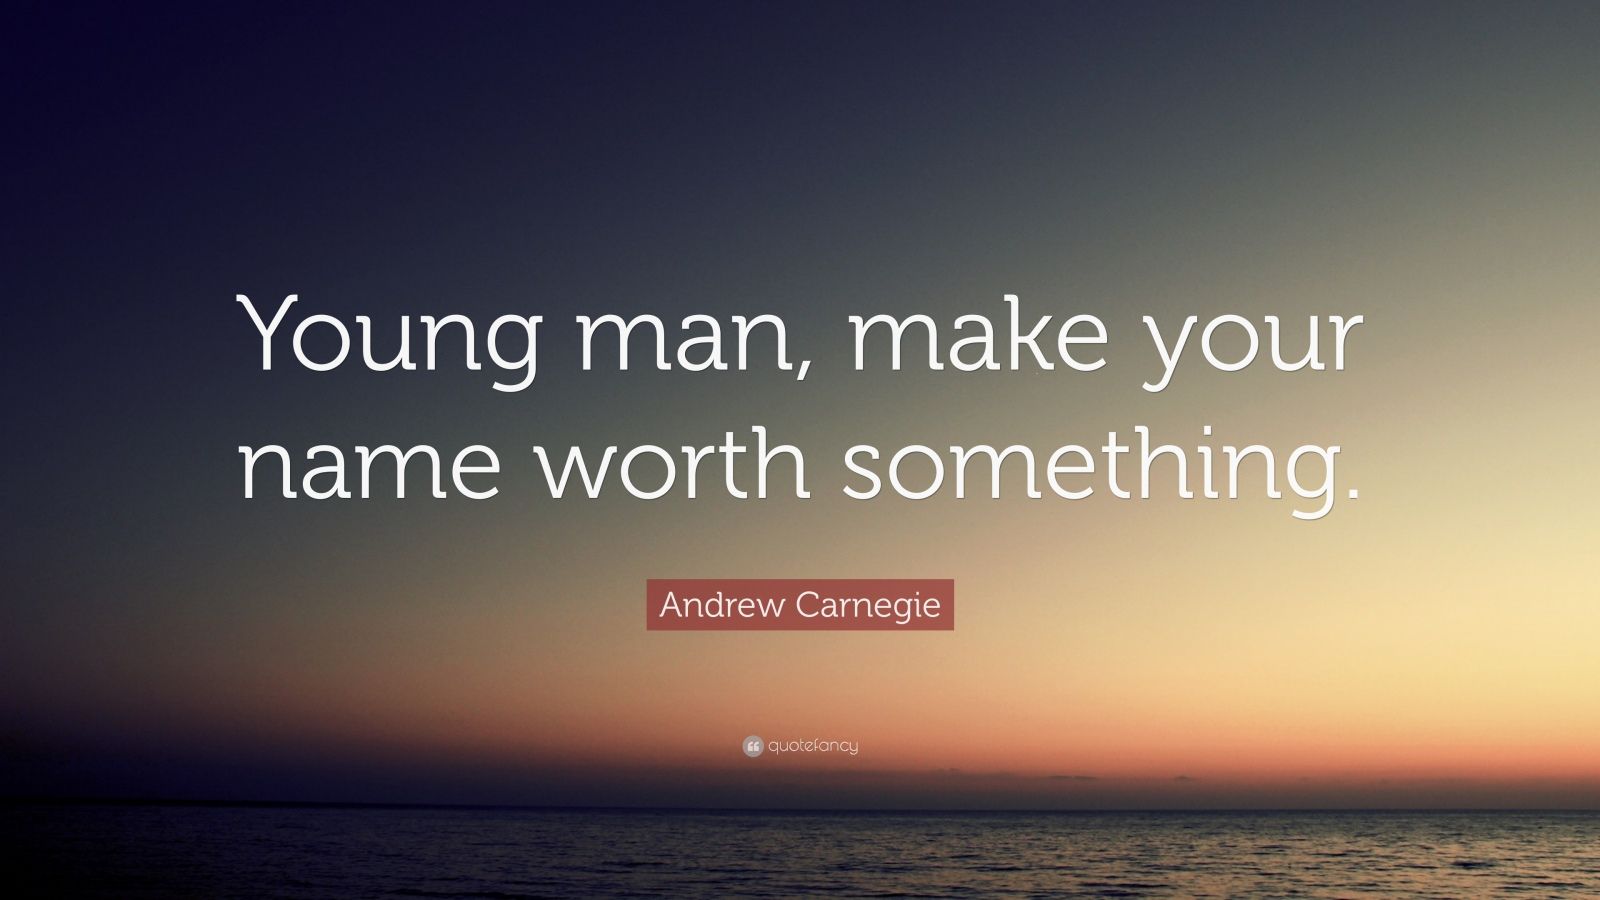 Andrew Carnegie Quotes 100 Wallpapers Quotefancy